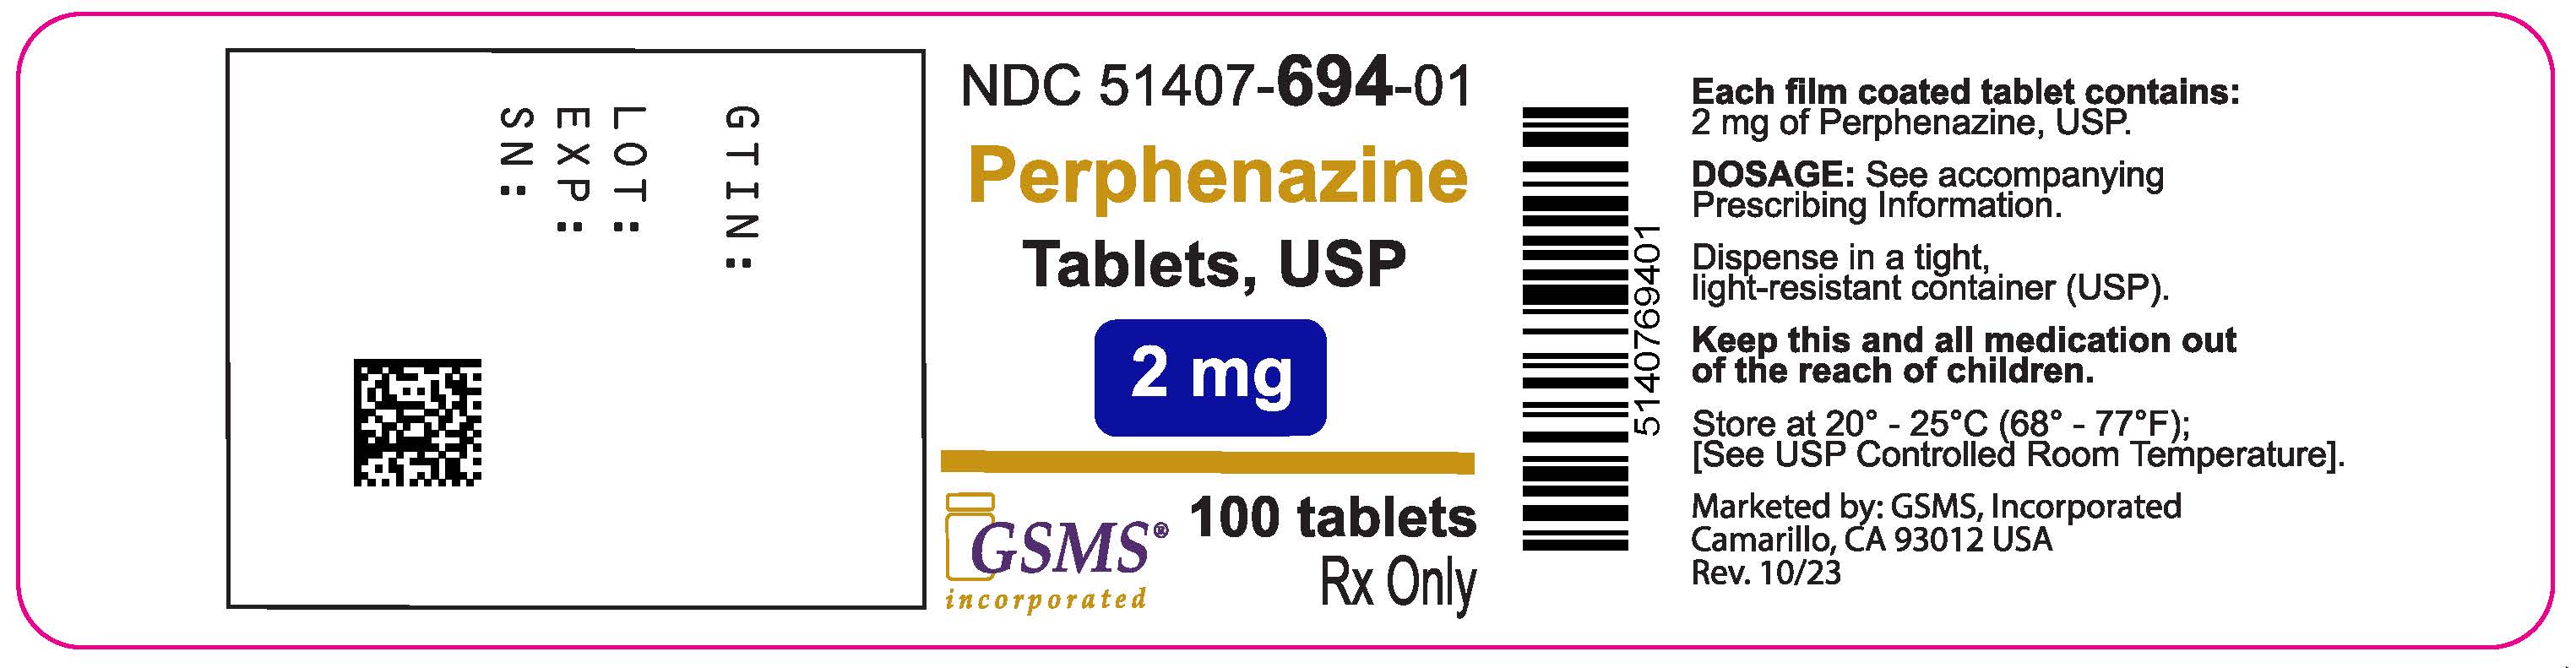 51407-694-01OL - PERPHENAZINE TABLETS 2 mg 100ct - ZYDUS - REV 10.23